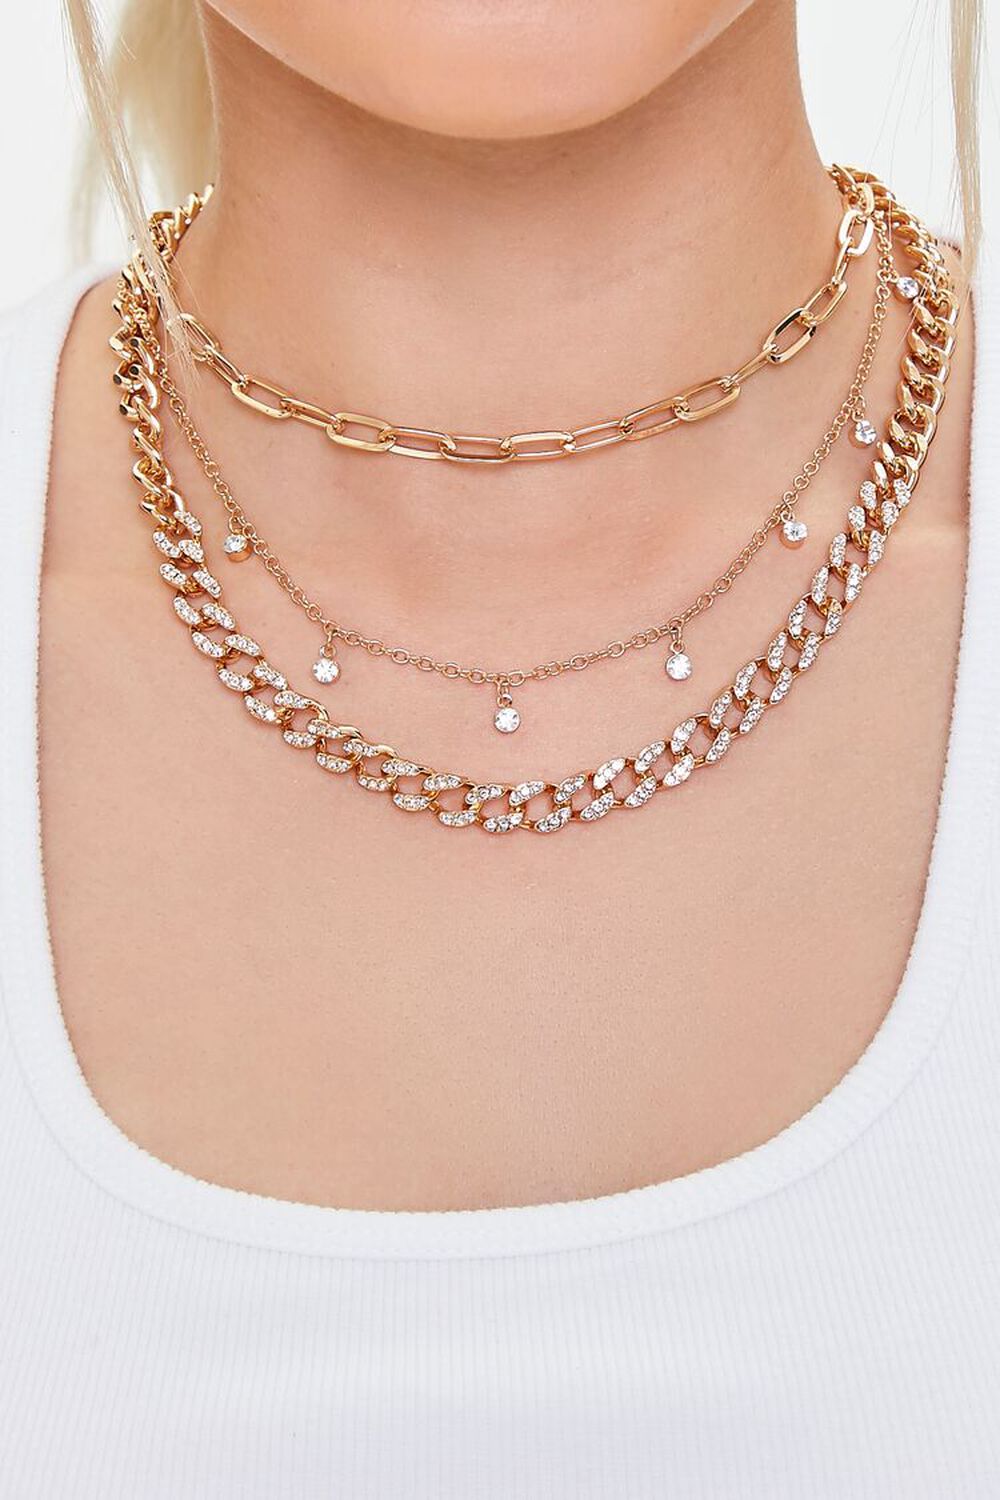 Rhinestone Layered Chain Necklace, image 1